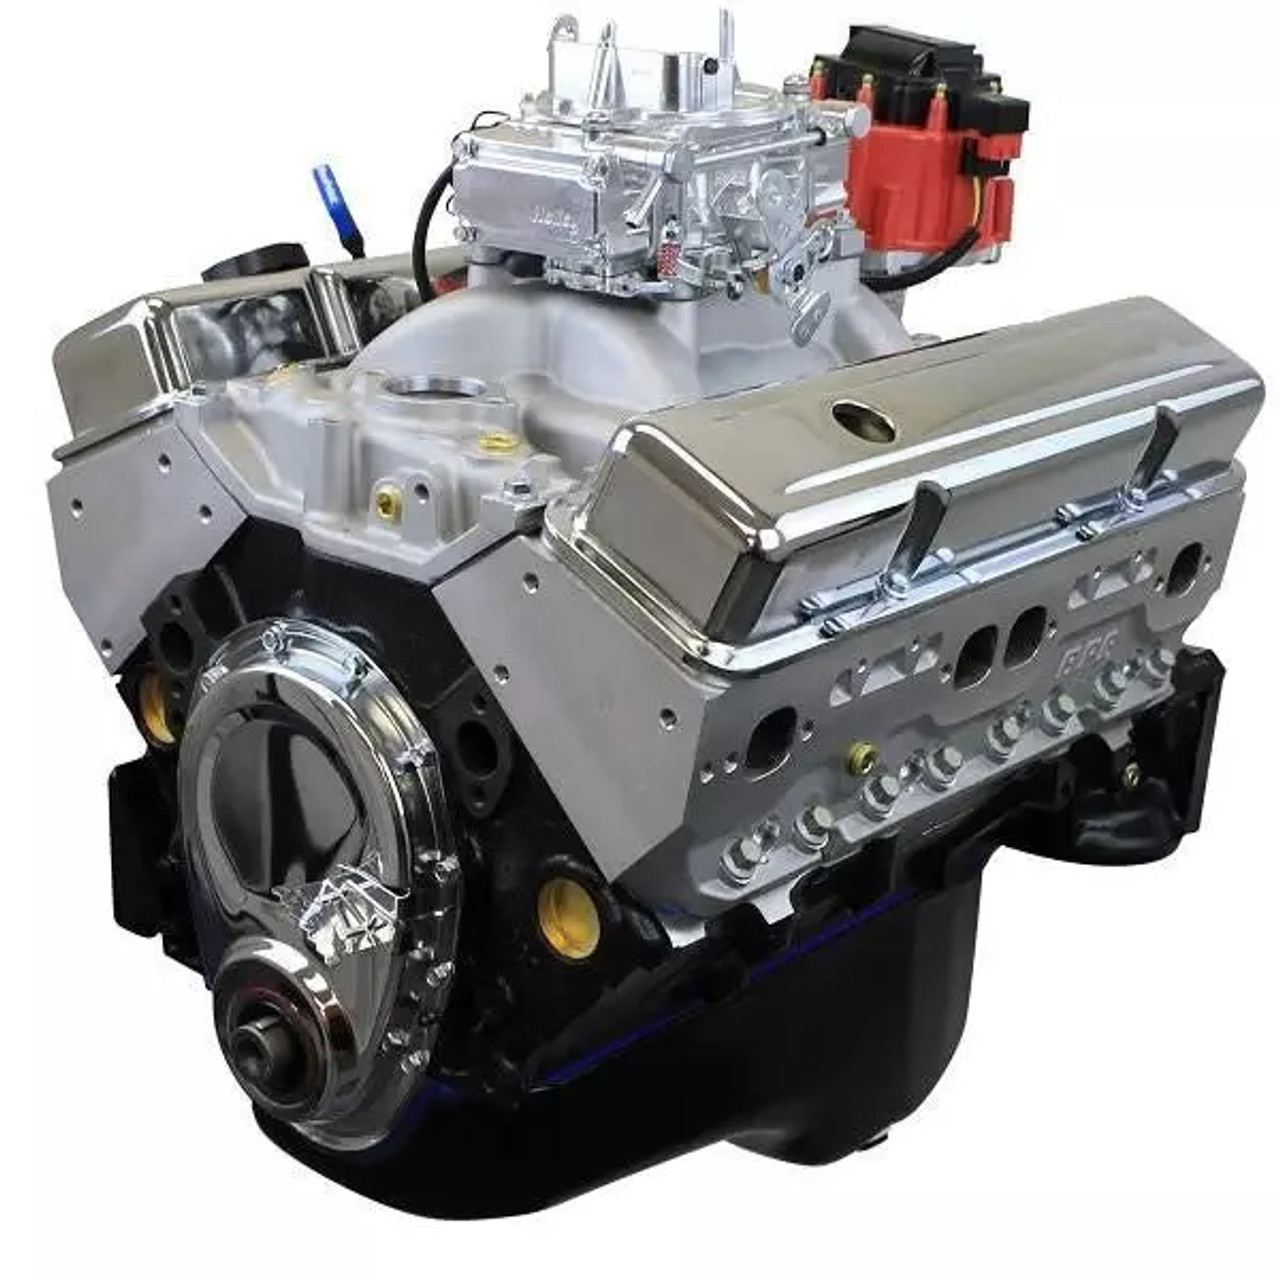 SBC 350 Crate Engine 390 HP - 410 Lbs Torque